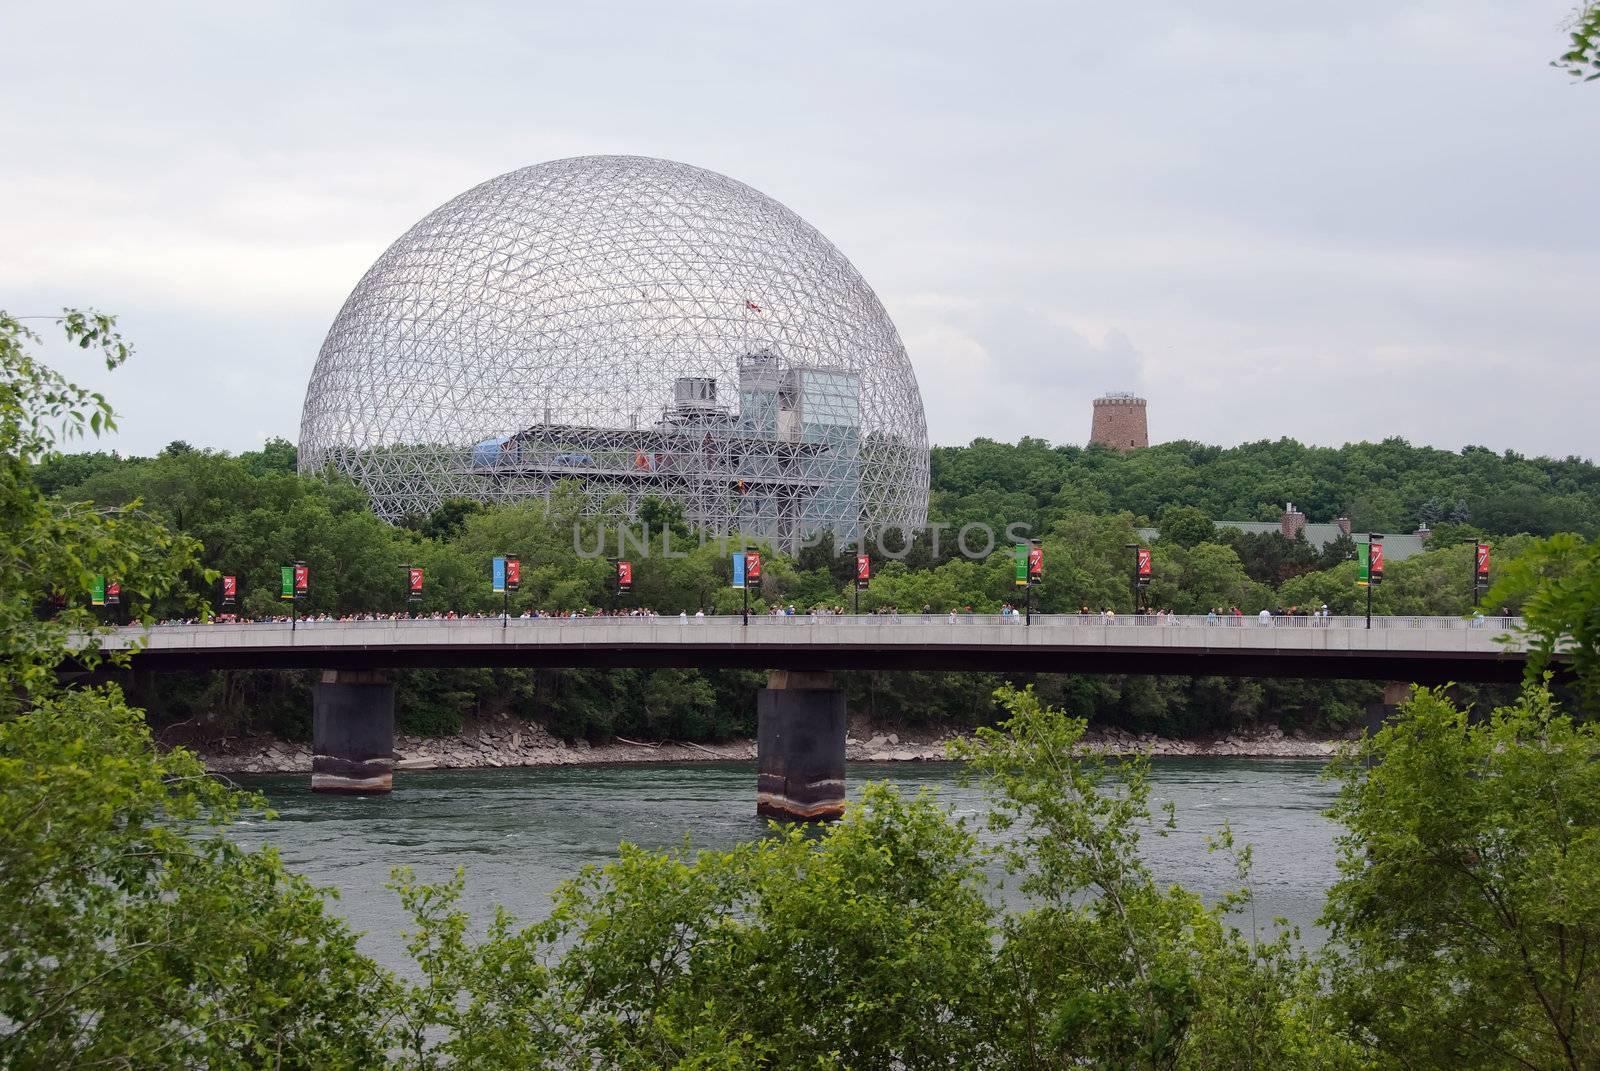 Image of the Biospere dome in Montreal